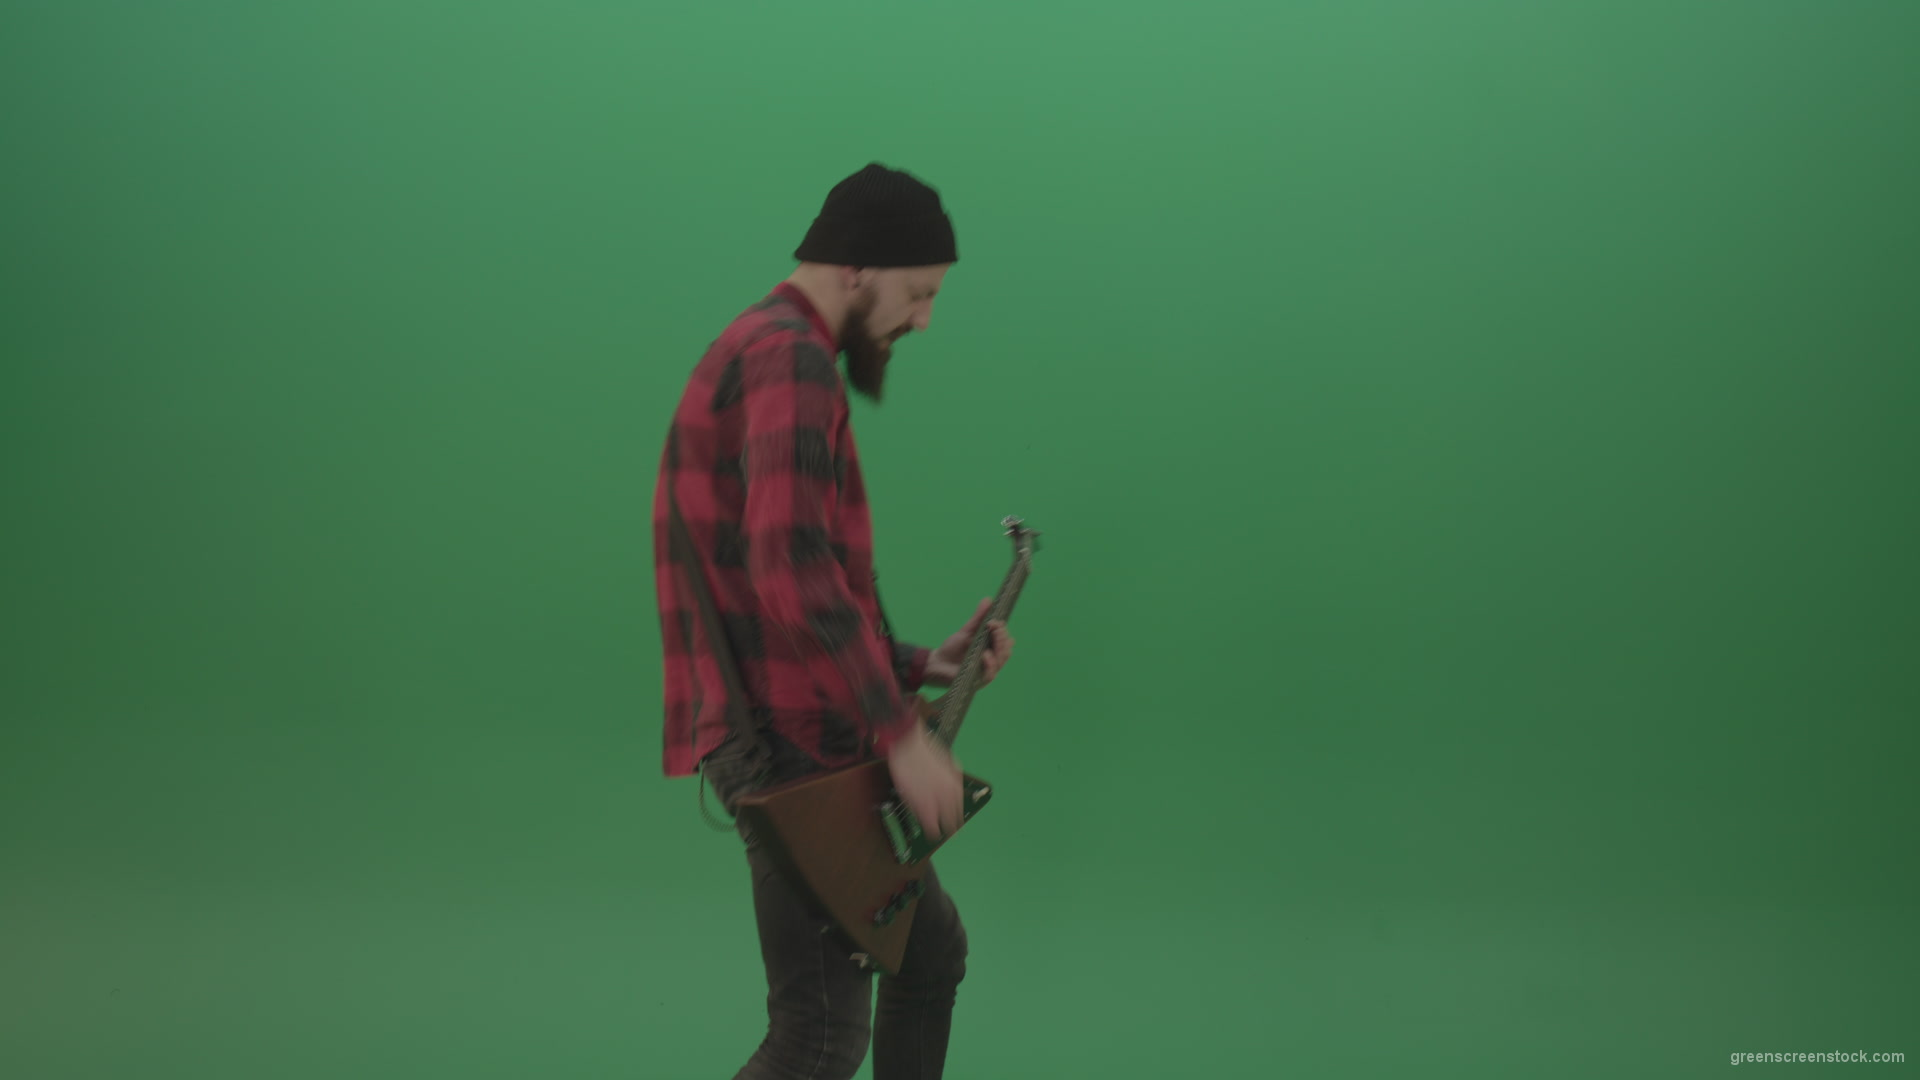 Man-punk-hardrock-guitarist-playing-guitar-in-side-view-in-green-screen-studio_007 Green Screen Stock